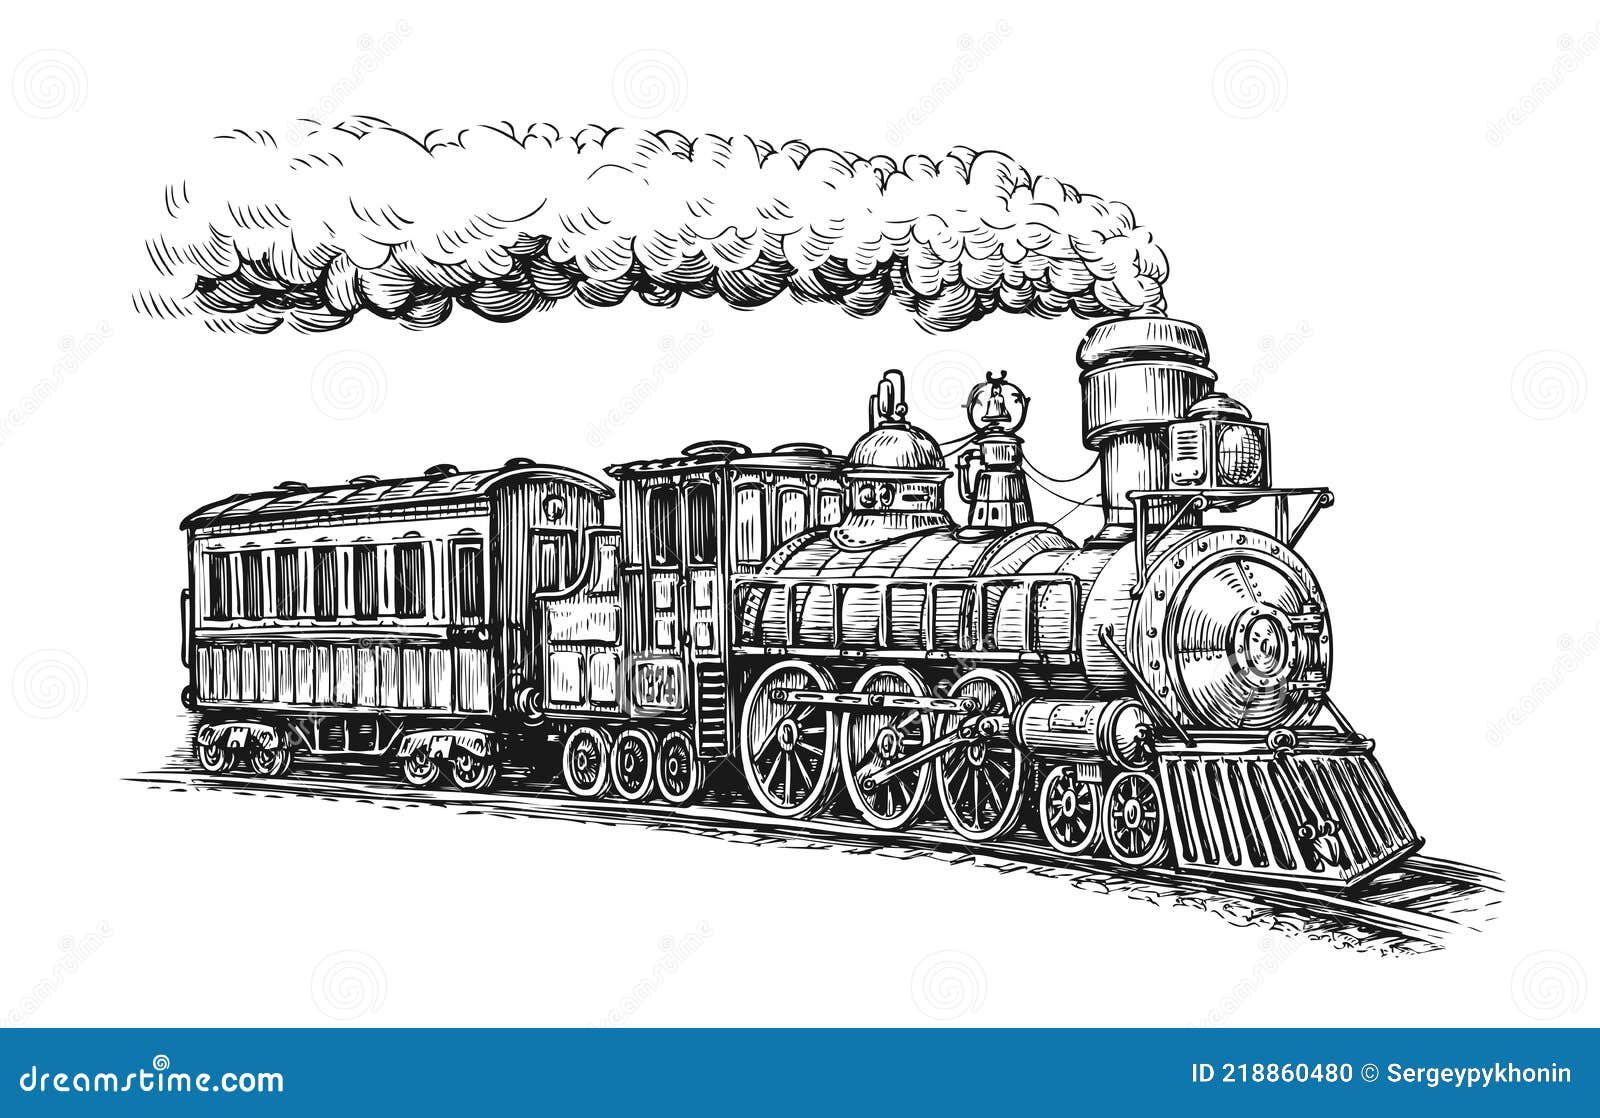 steam locomotive transport sketch. hand drawn vintage  